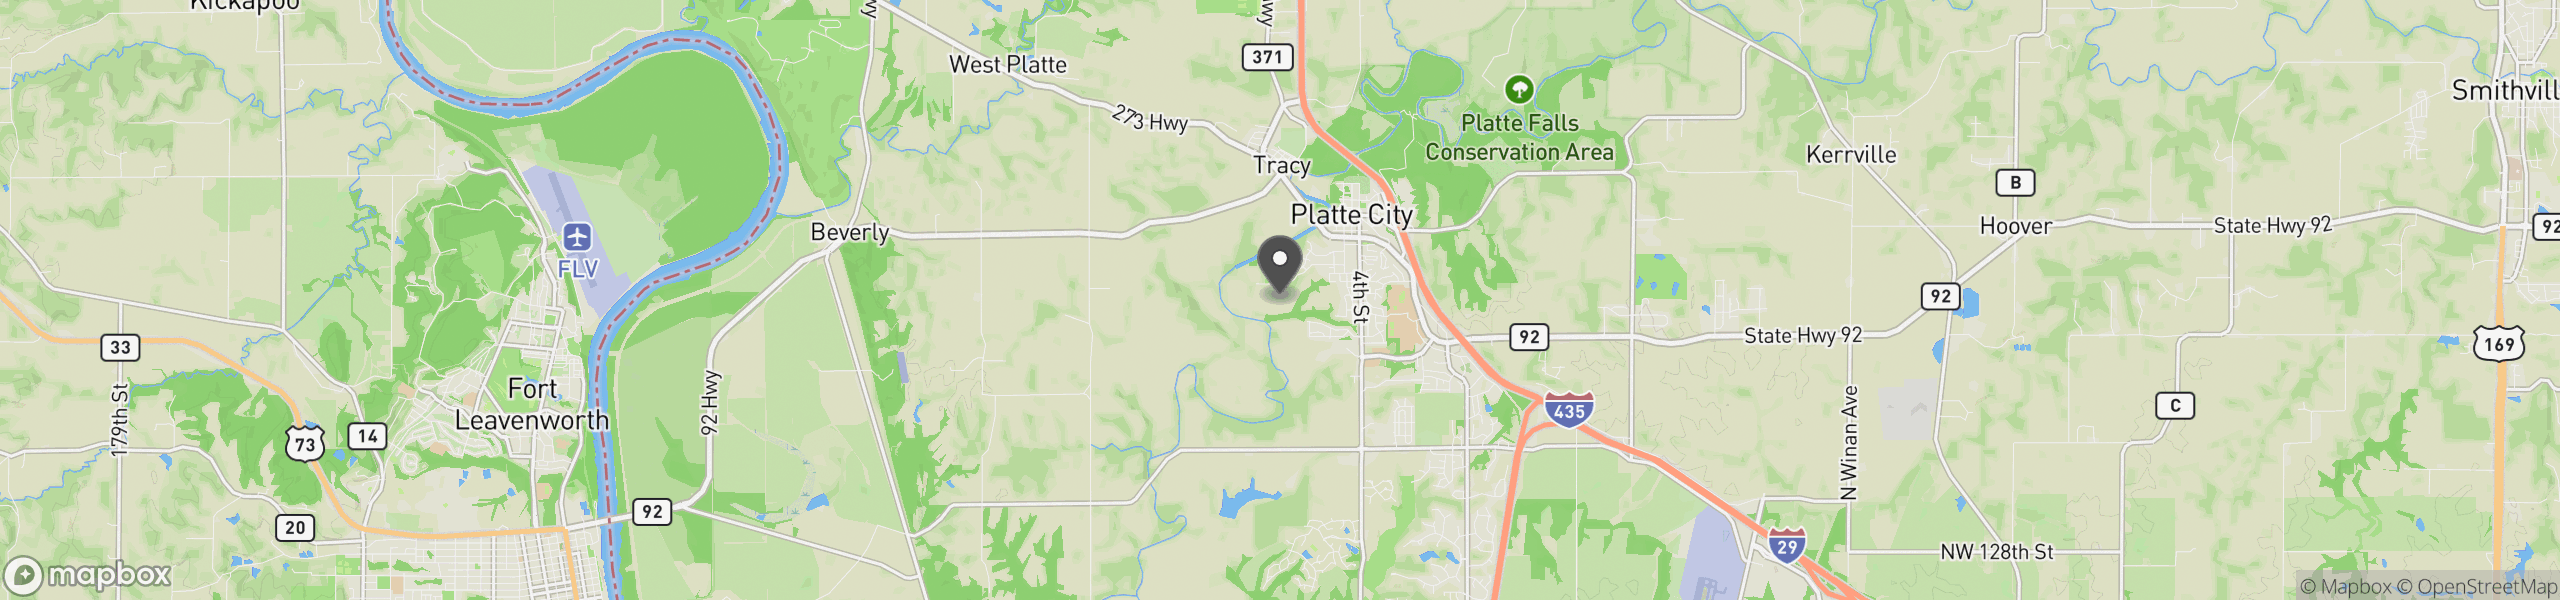 Platte City, MO 64079